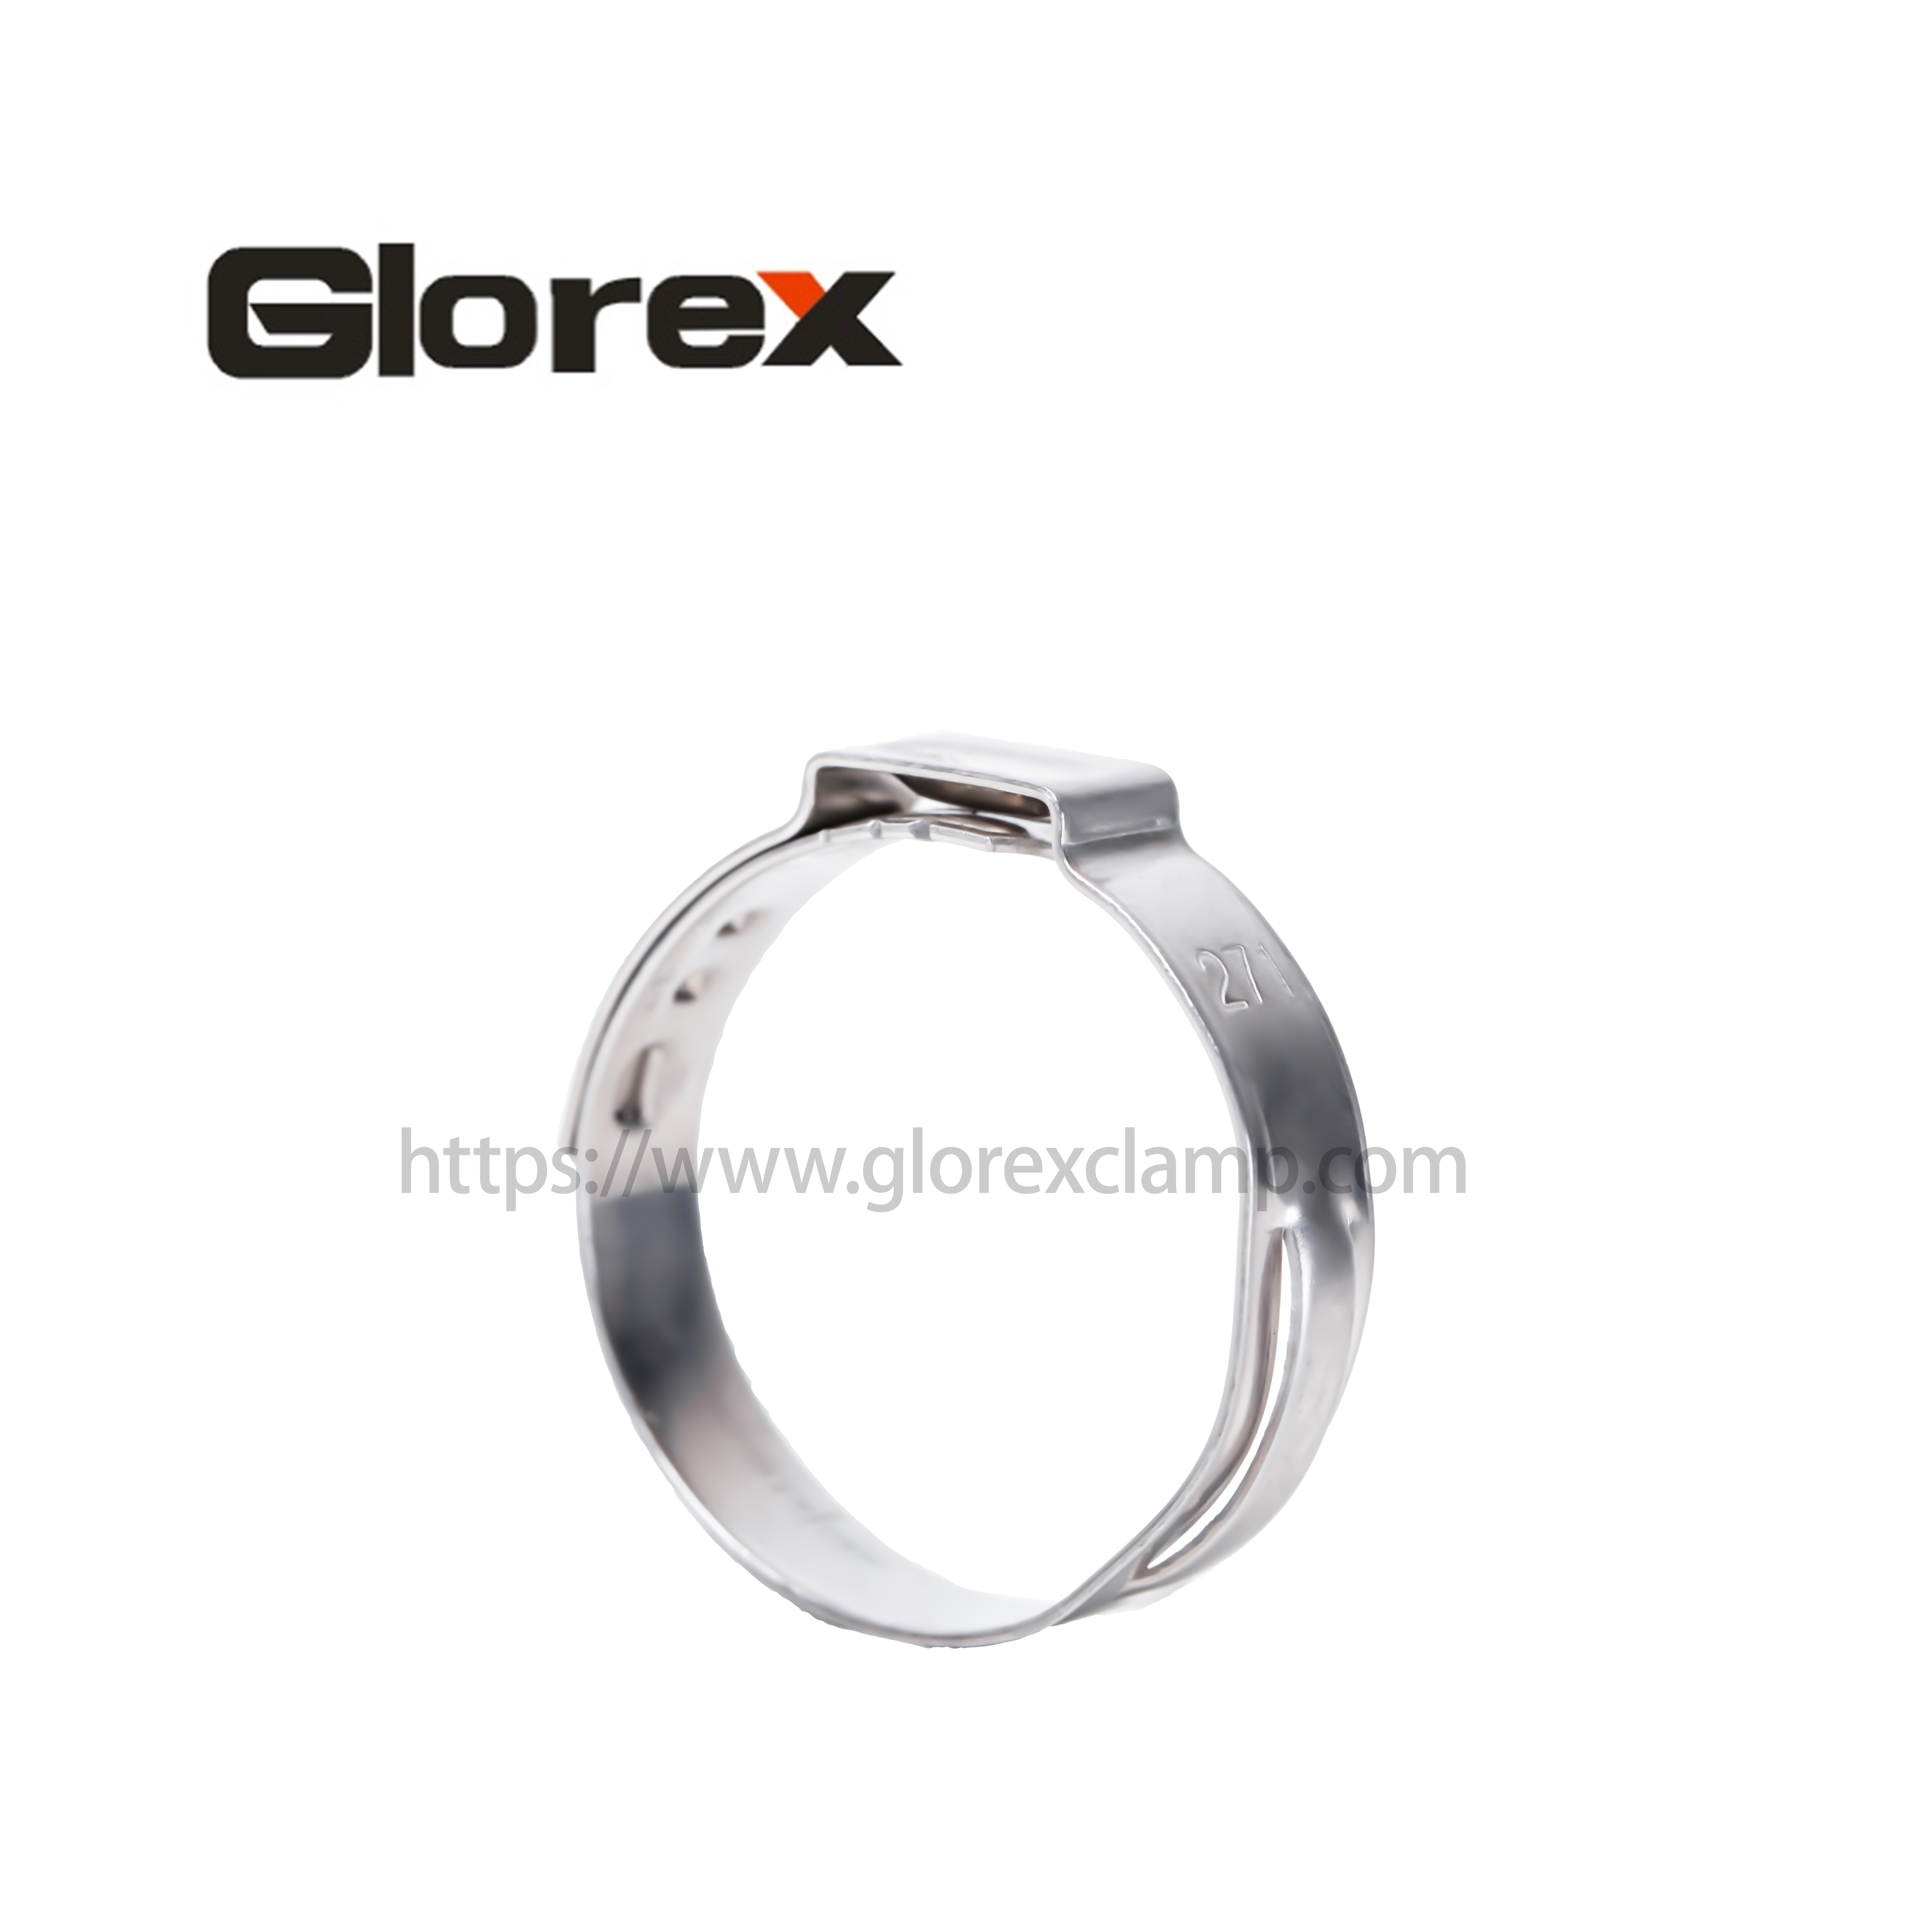 China Factory for Mini Chain Pipe Clamp - Uniaural non-polar hose clamp – Glorex